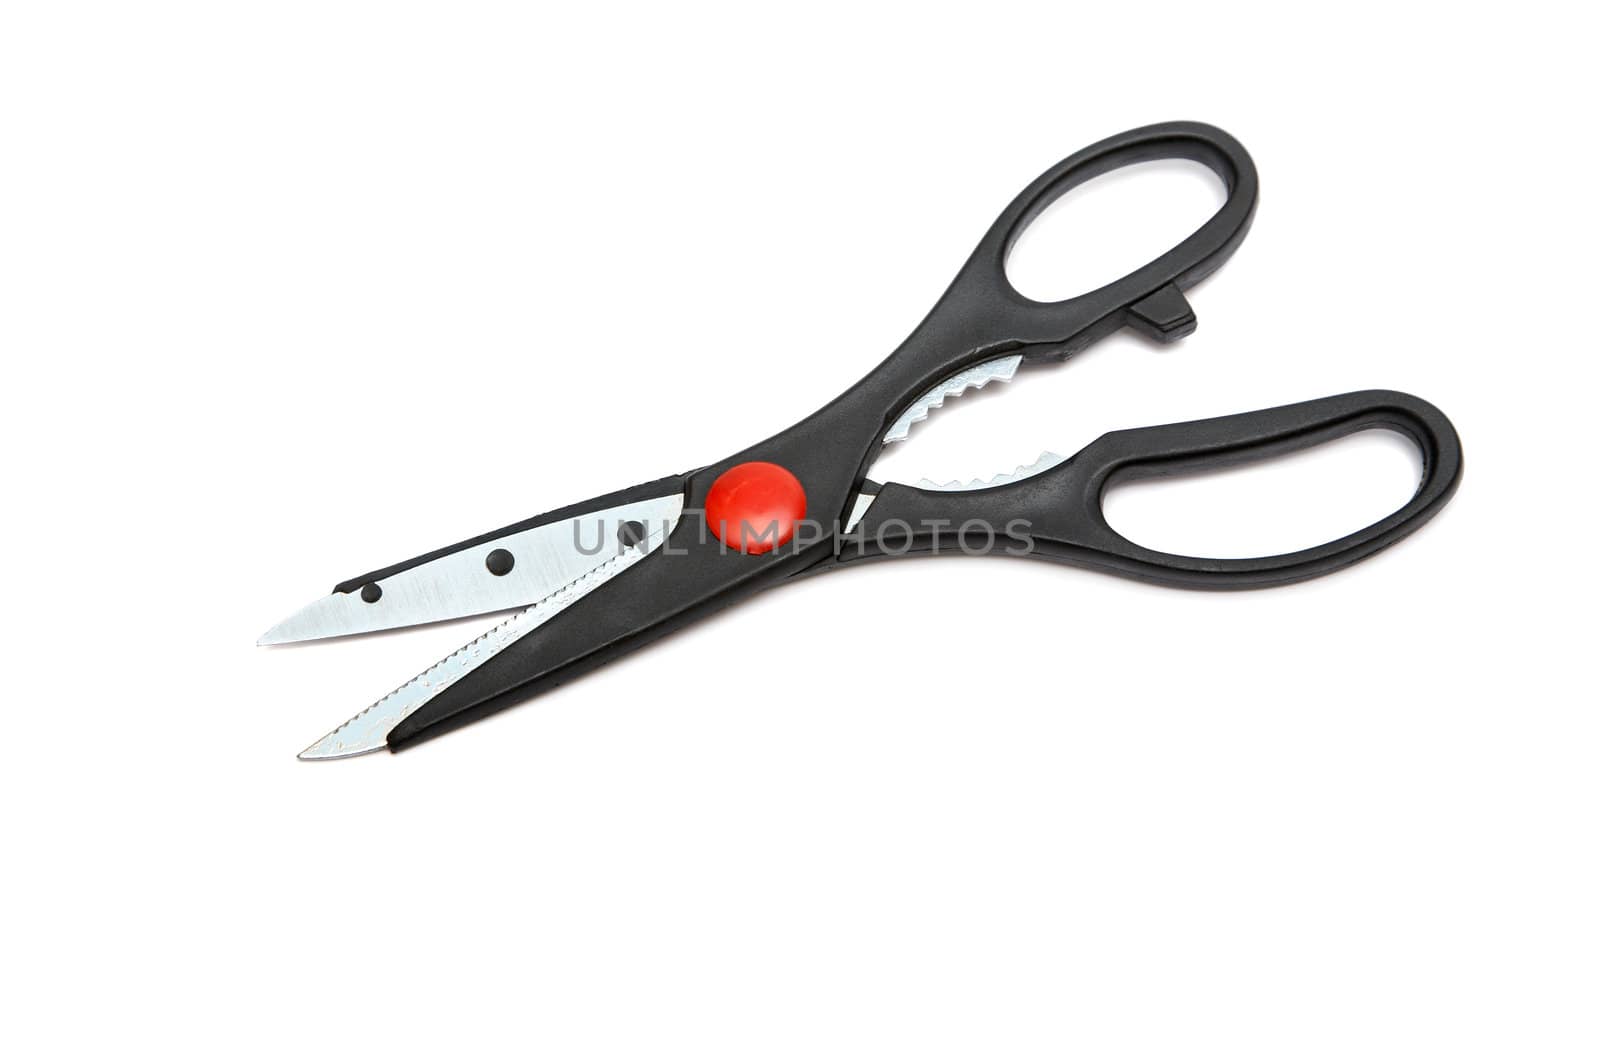 kitchen scissors by terex